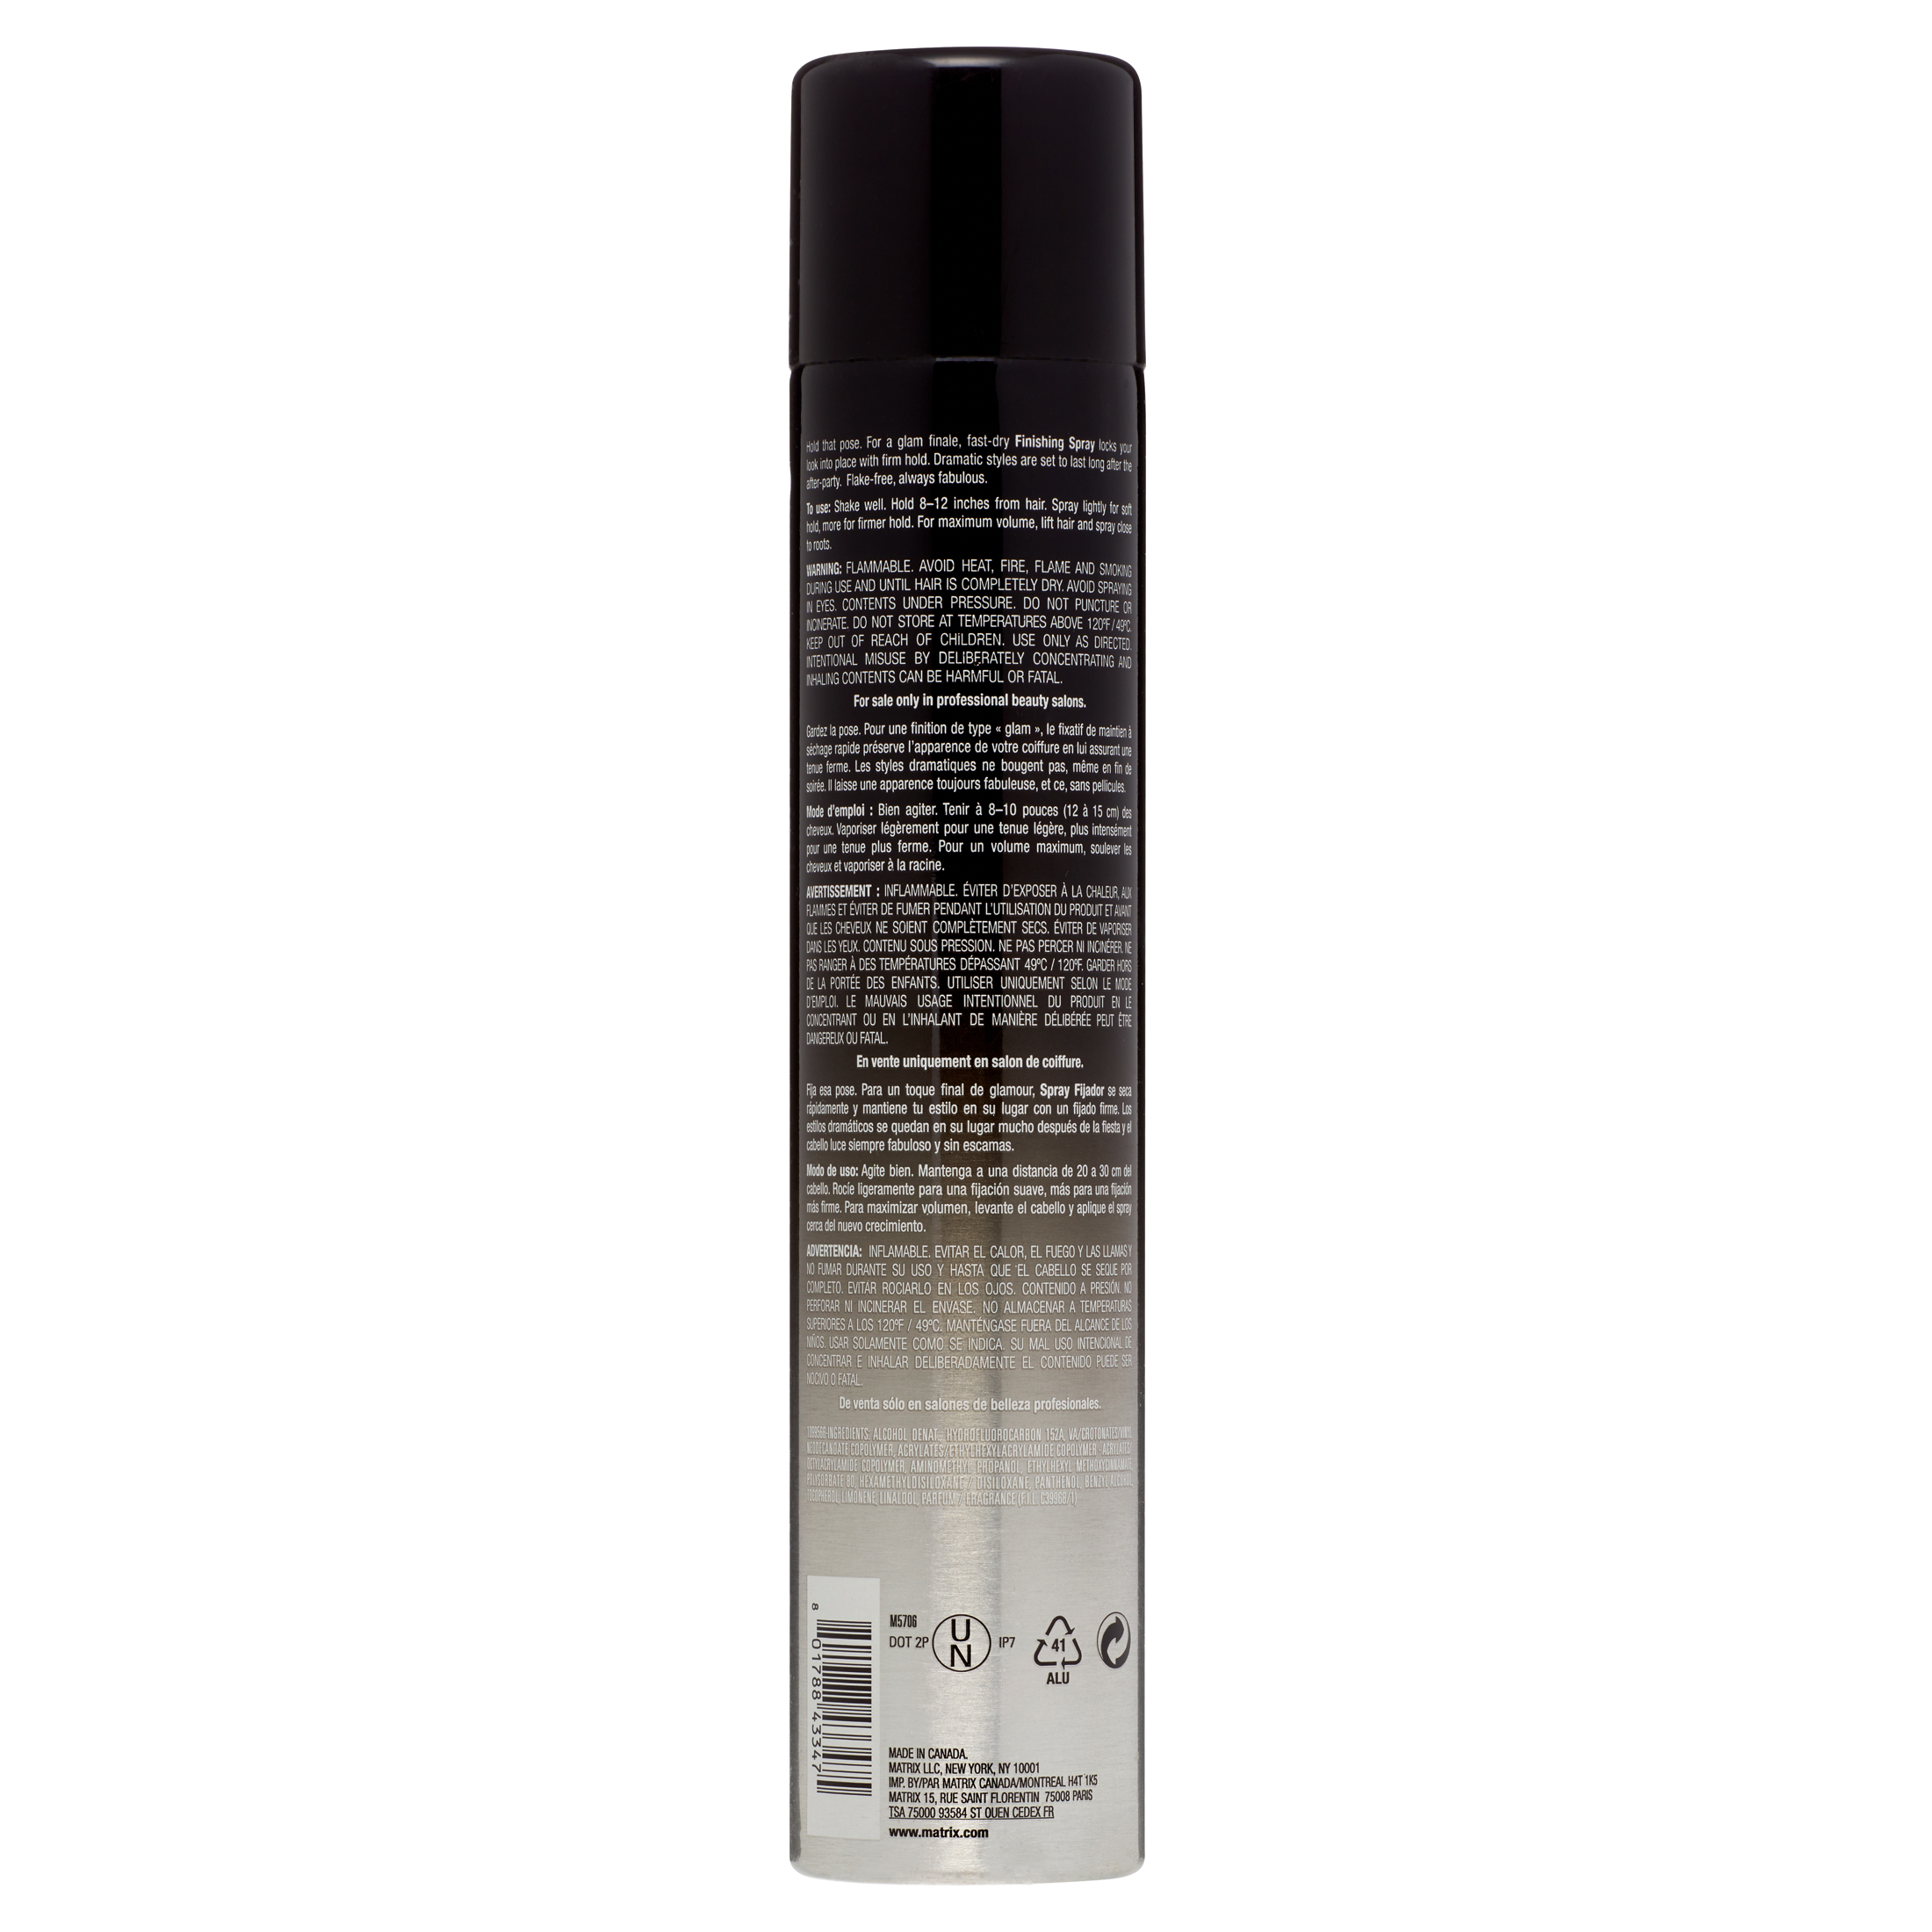 Vavoom Freezing Spray by Matrix for Unisex - 11 oz Hairspray - image 4 of 6